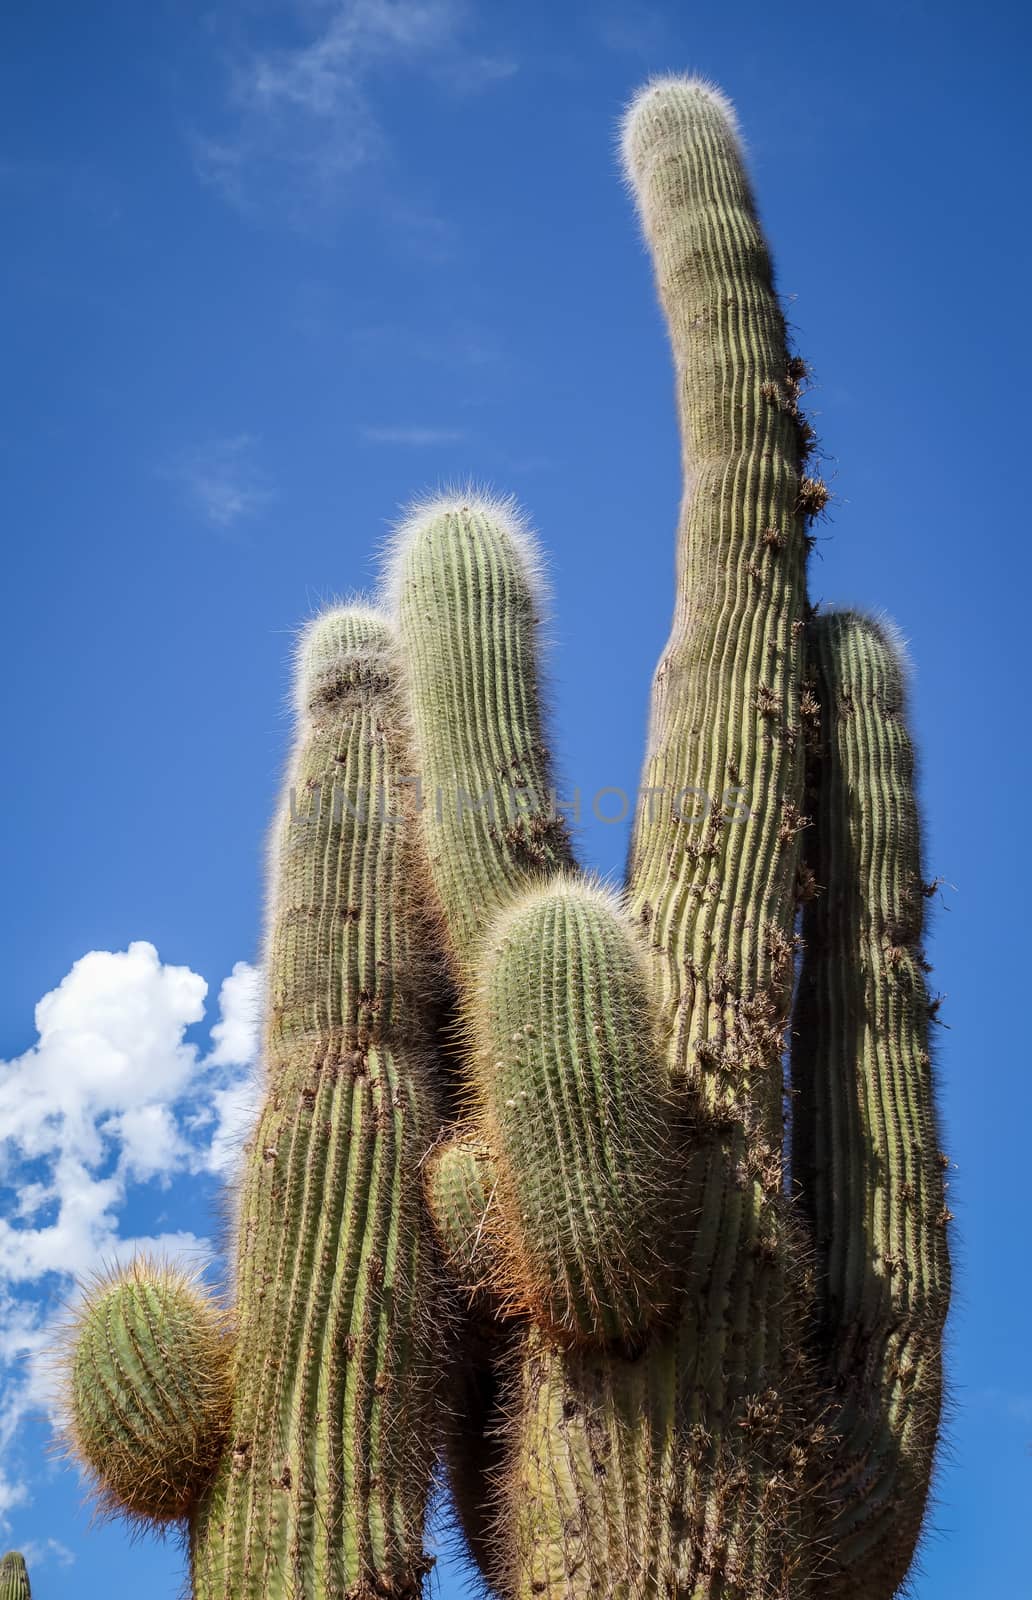 Giant cactus close-up in the Tilcara quebrada moutains, Argentina